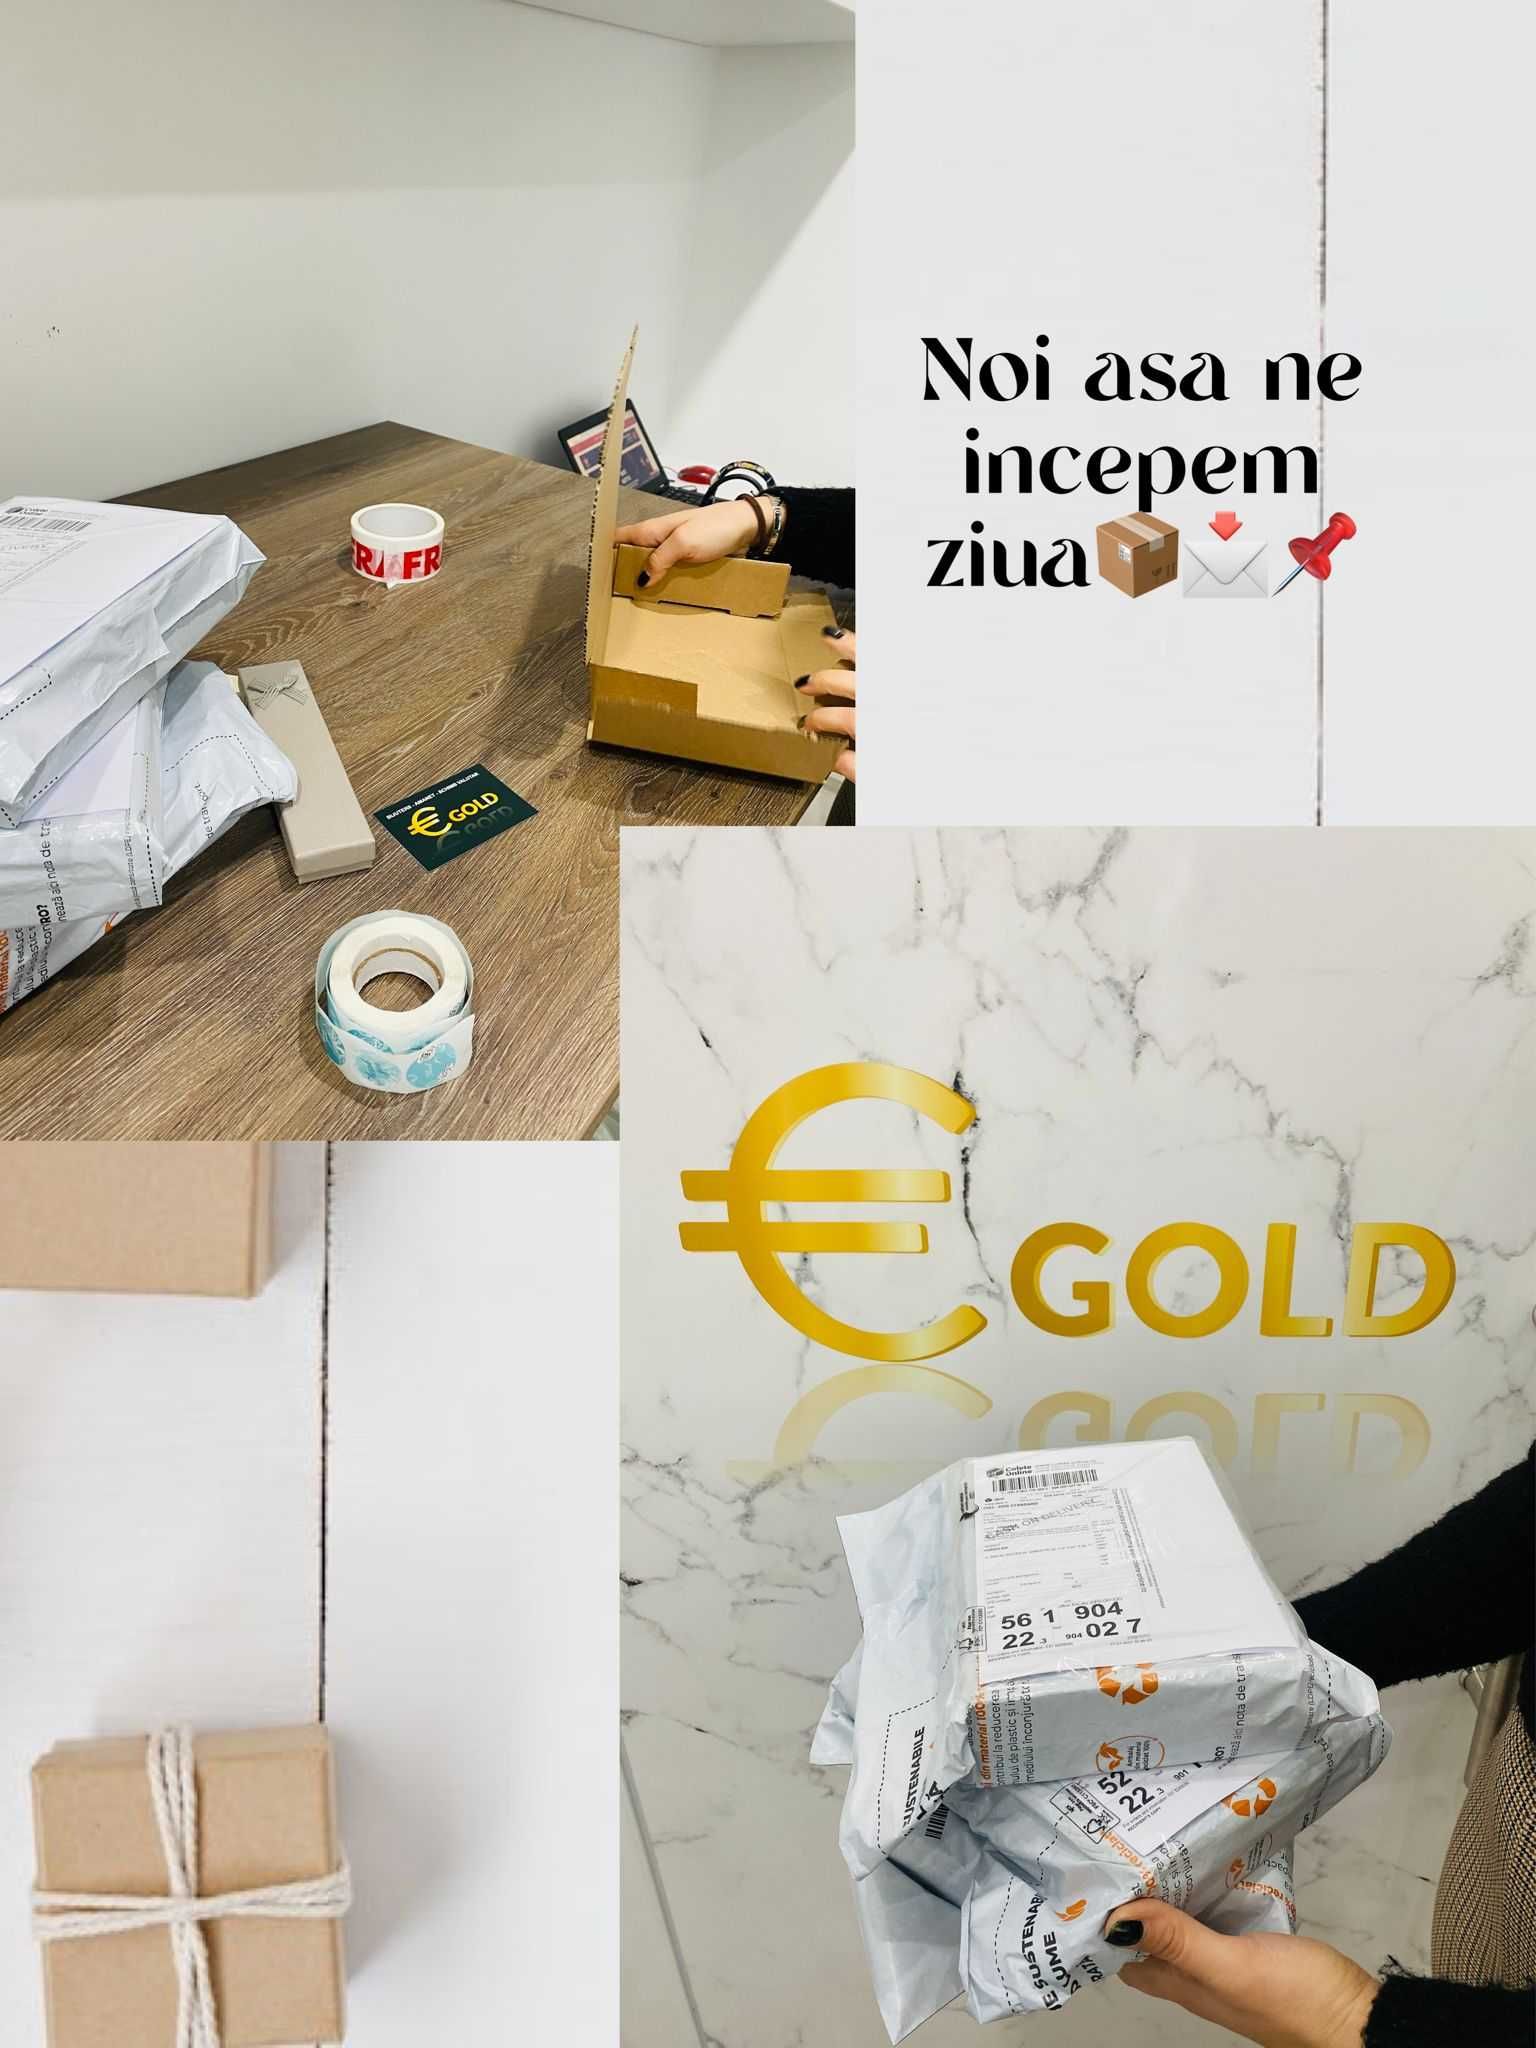 (3088) Cercei Aur 14k, 2,13 grame FB Bijoux Euro Gold